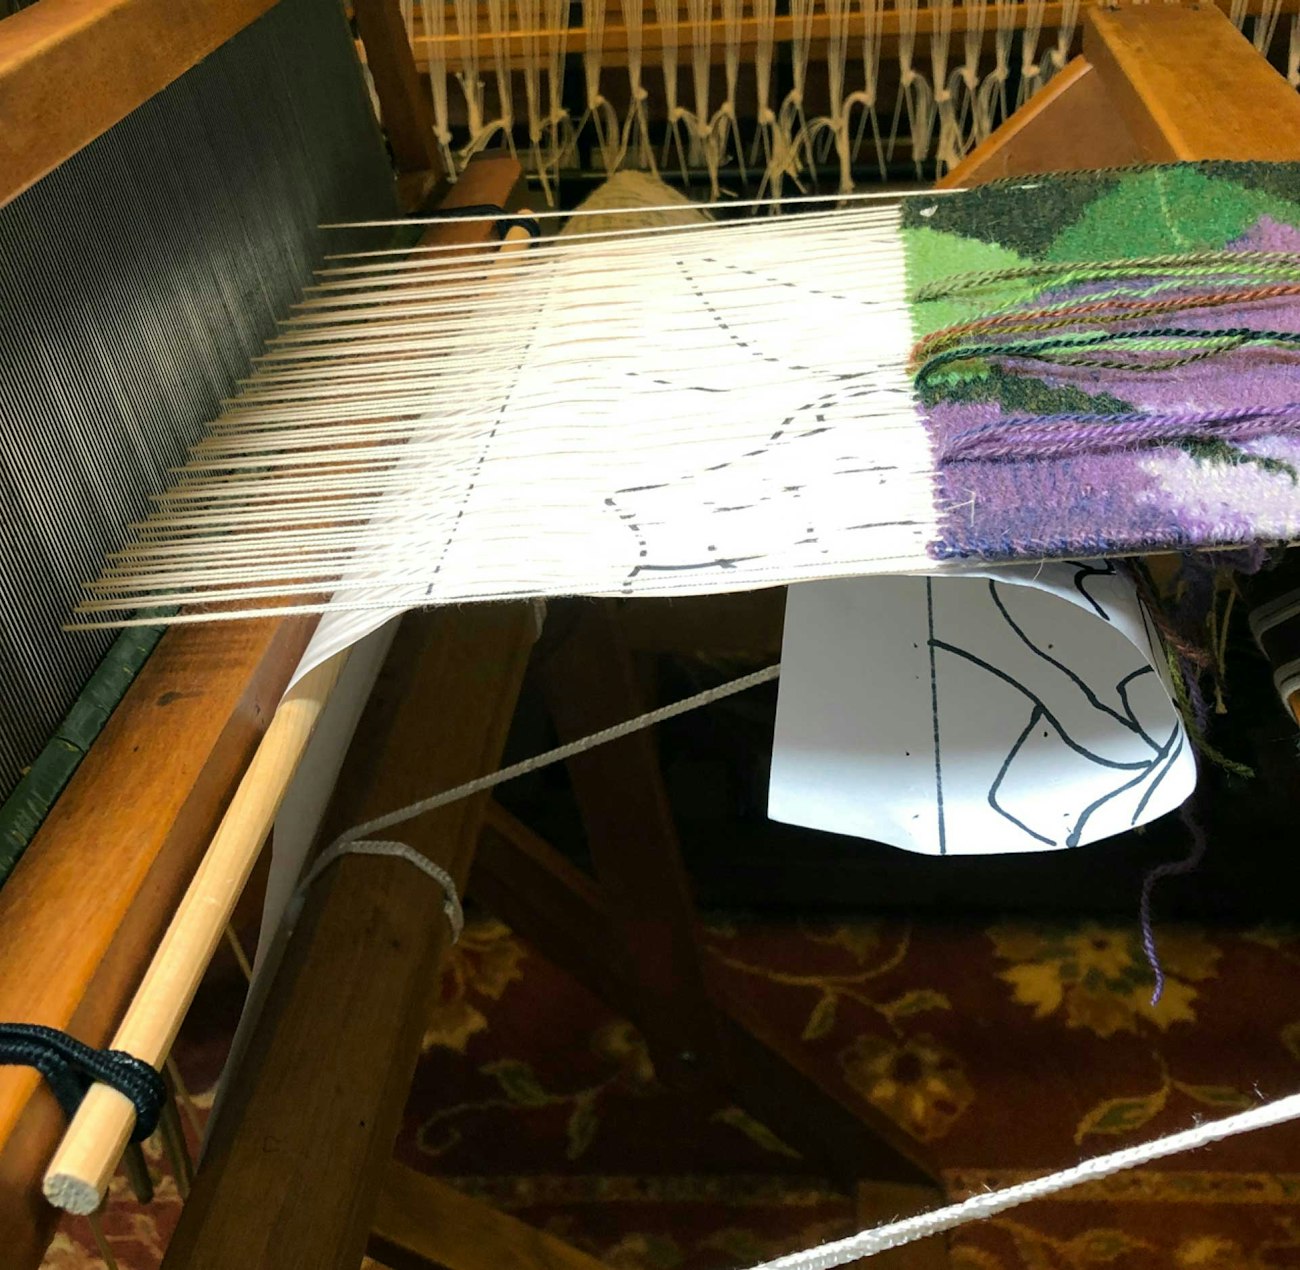 Tapestry Weaving: Using a Cartoon